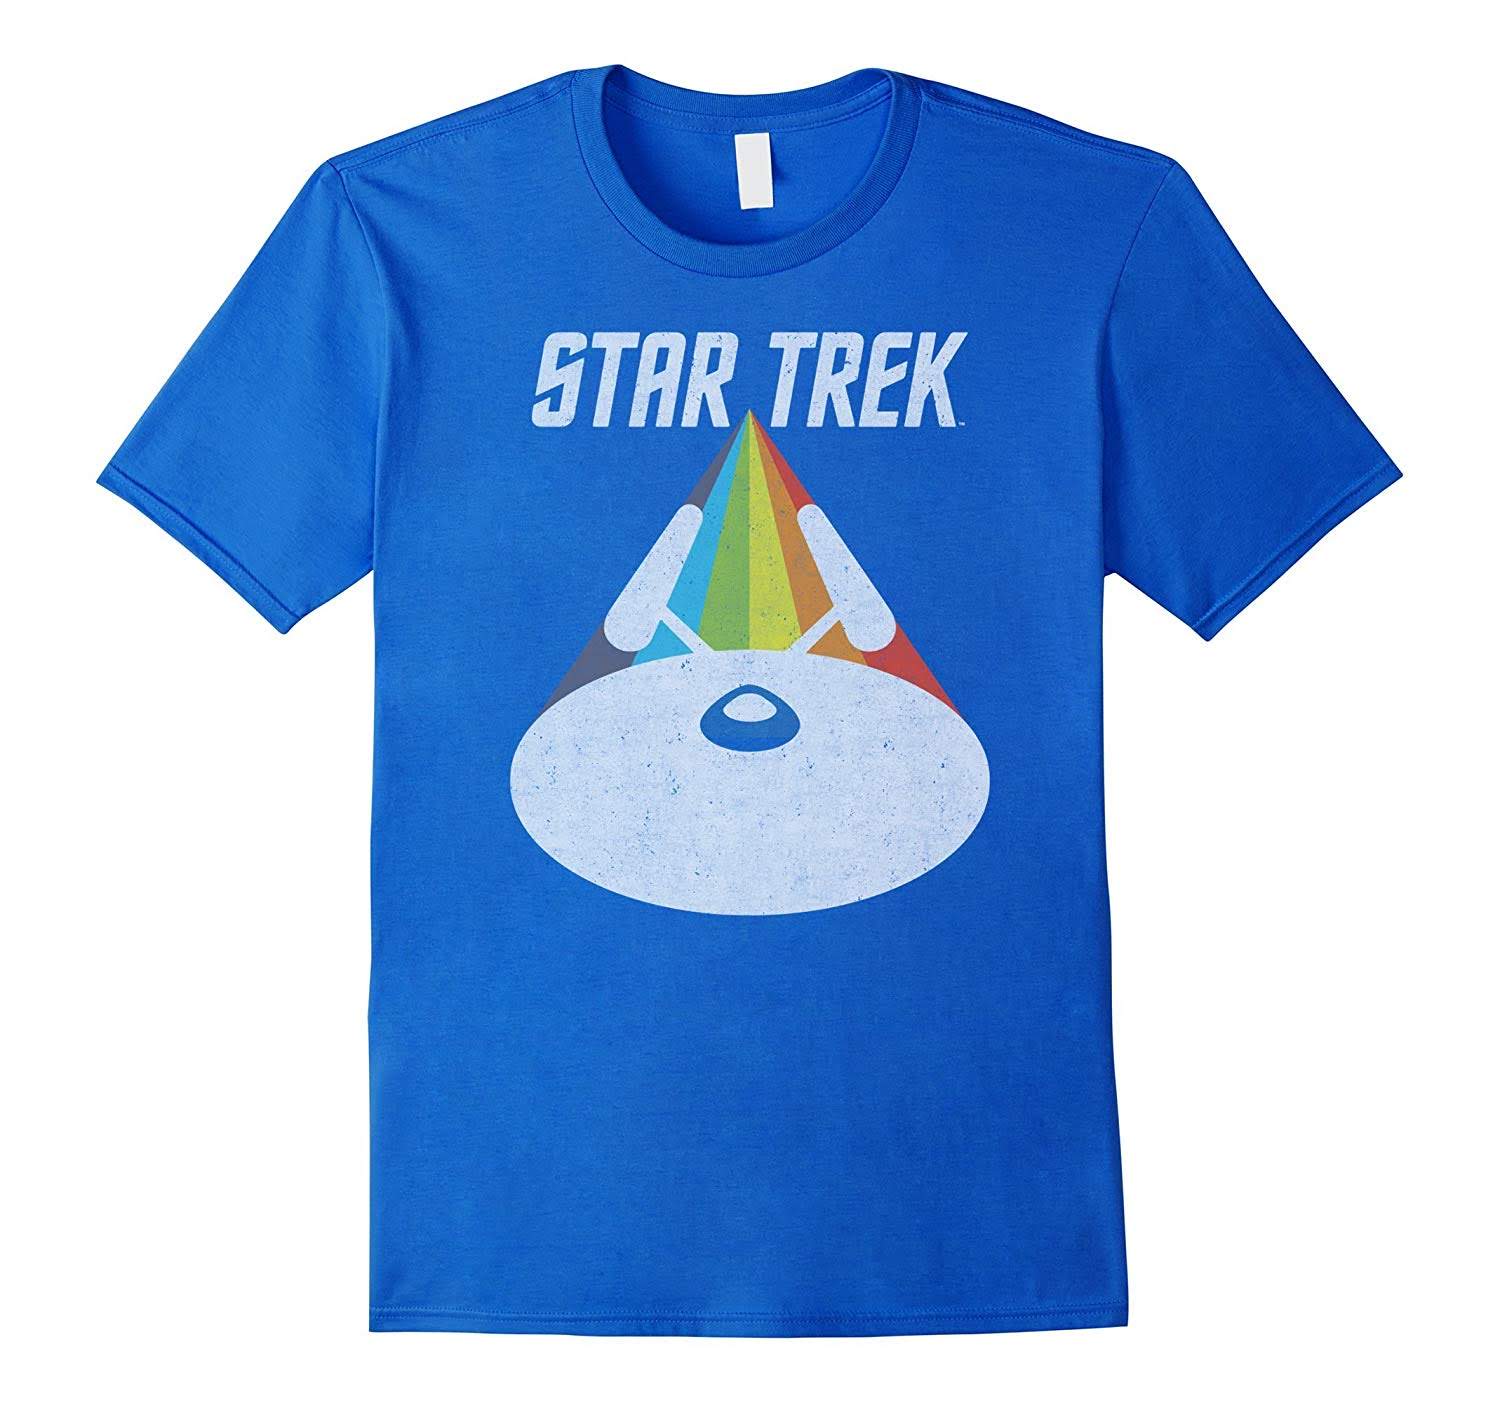 Star Trek Original Series Intro Words Above Enterprise Ship T-Shirt NEW UNWORN 